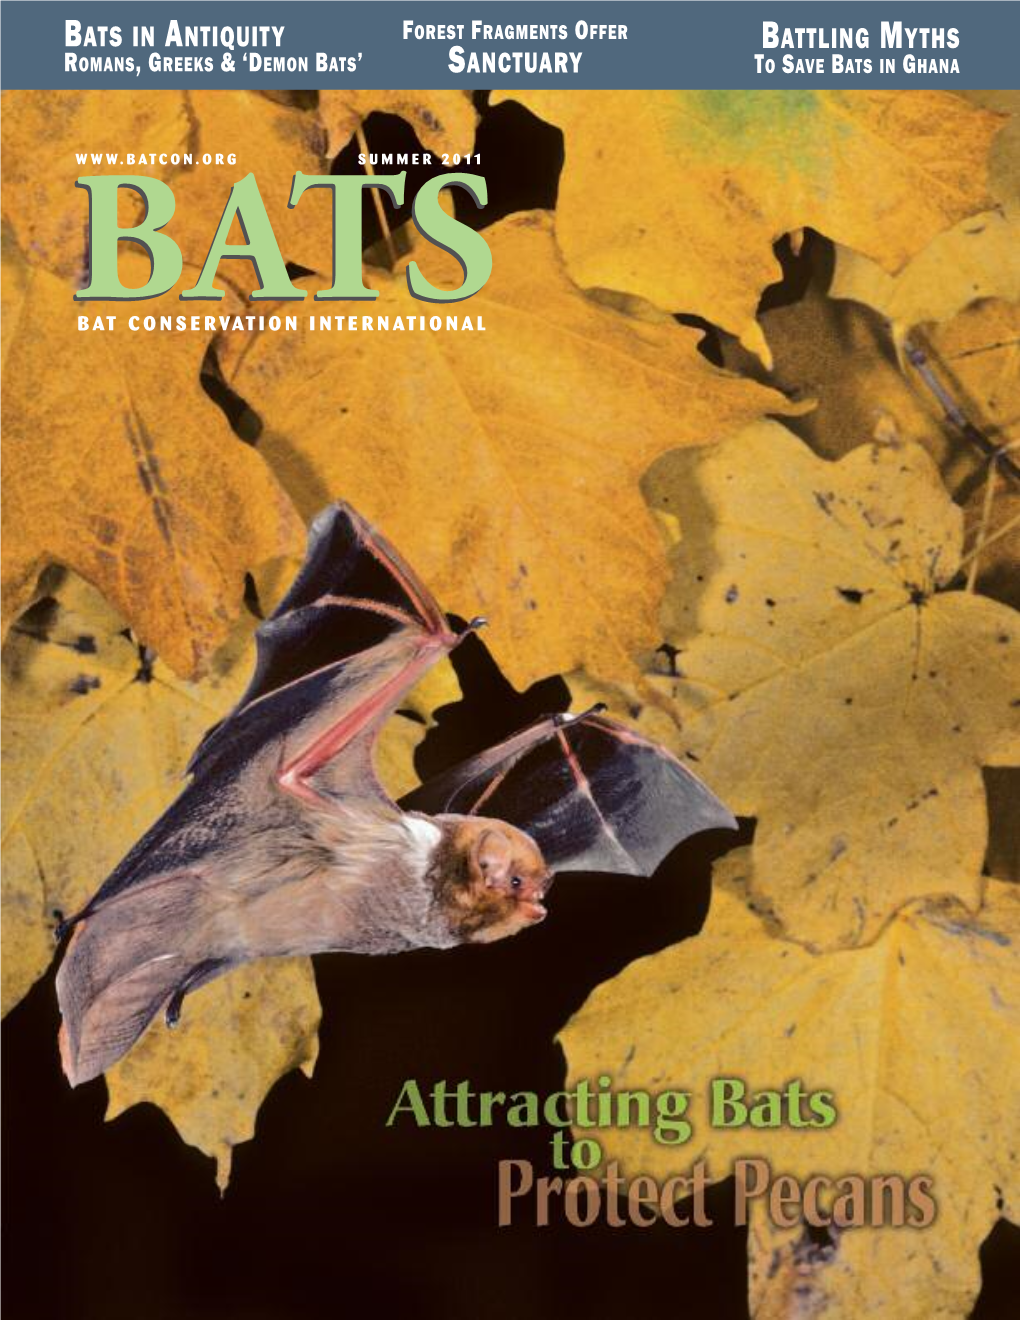 Bats in Antiquity Battling Myths Sanctuary